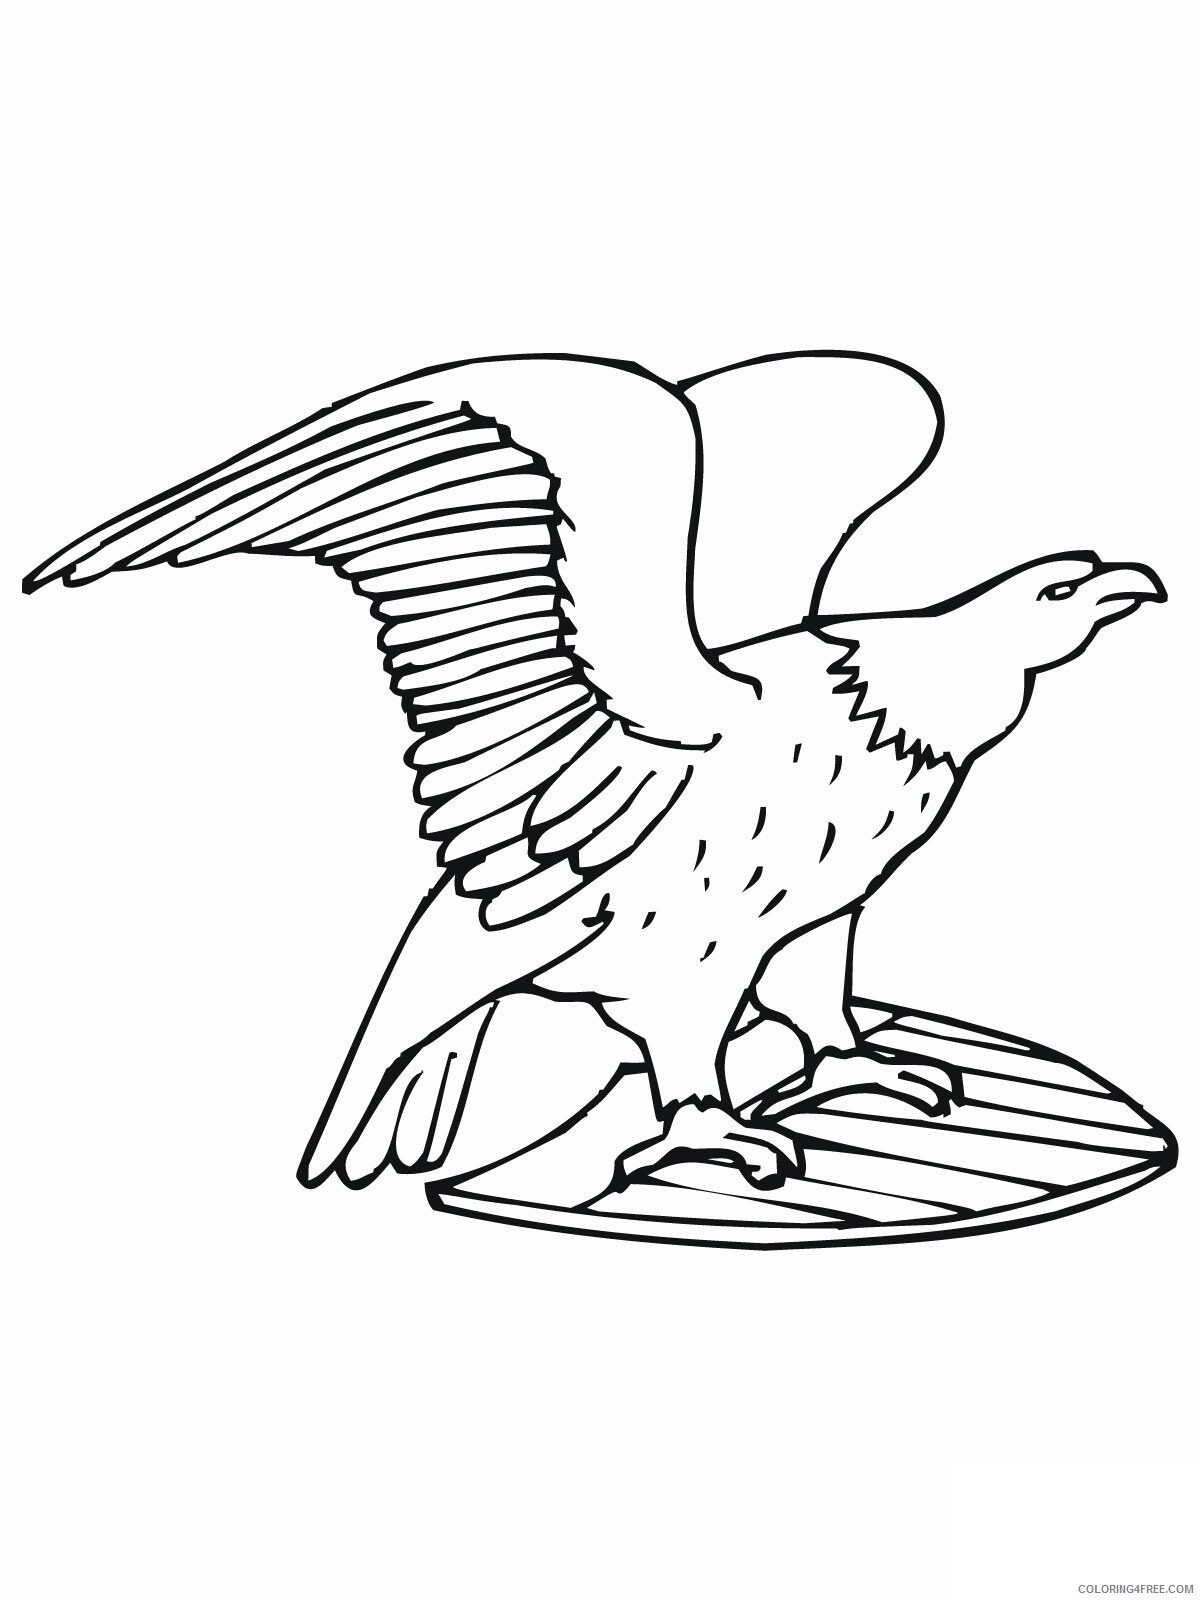 Bald Eagle Coloring Pages Animal Printable Sheets Free Bald Eagle 2021 0176 Coloring4free